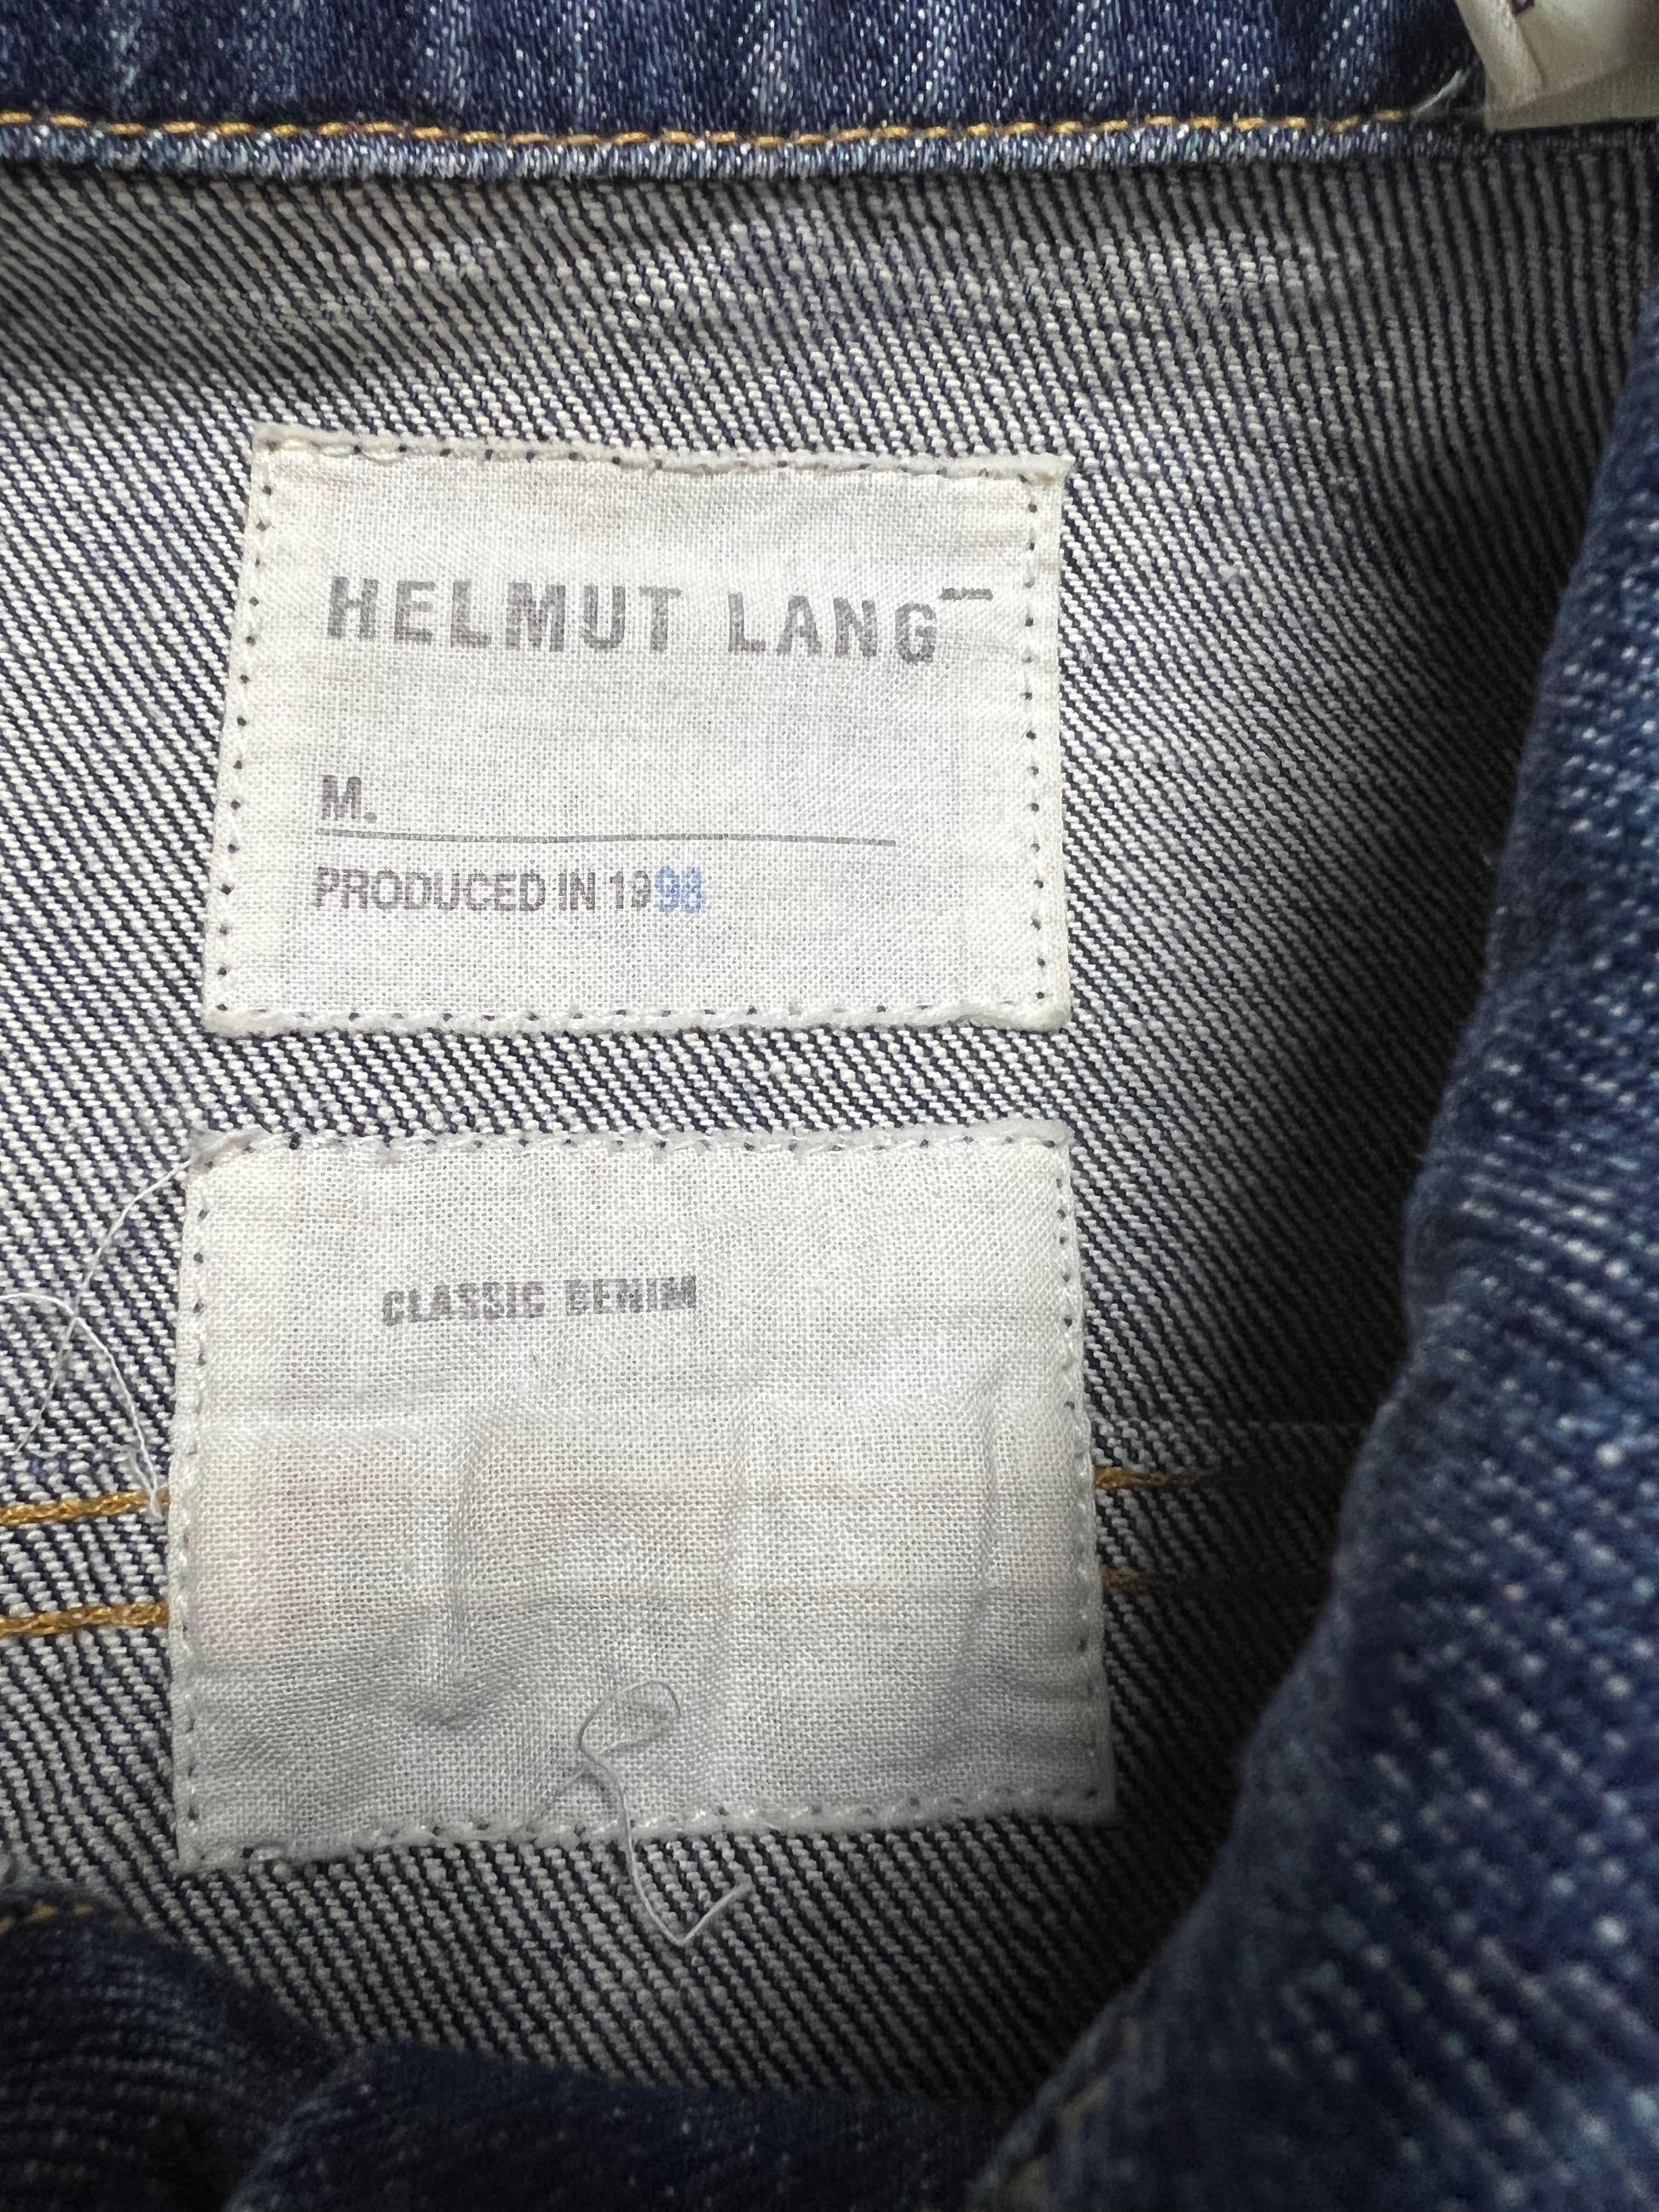 Helmut Lang Archive vintage dark denim type 1 trucker jacket size